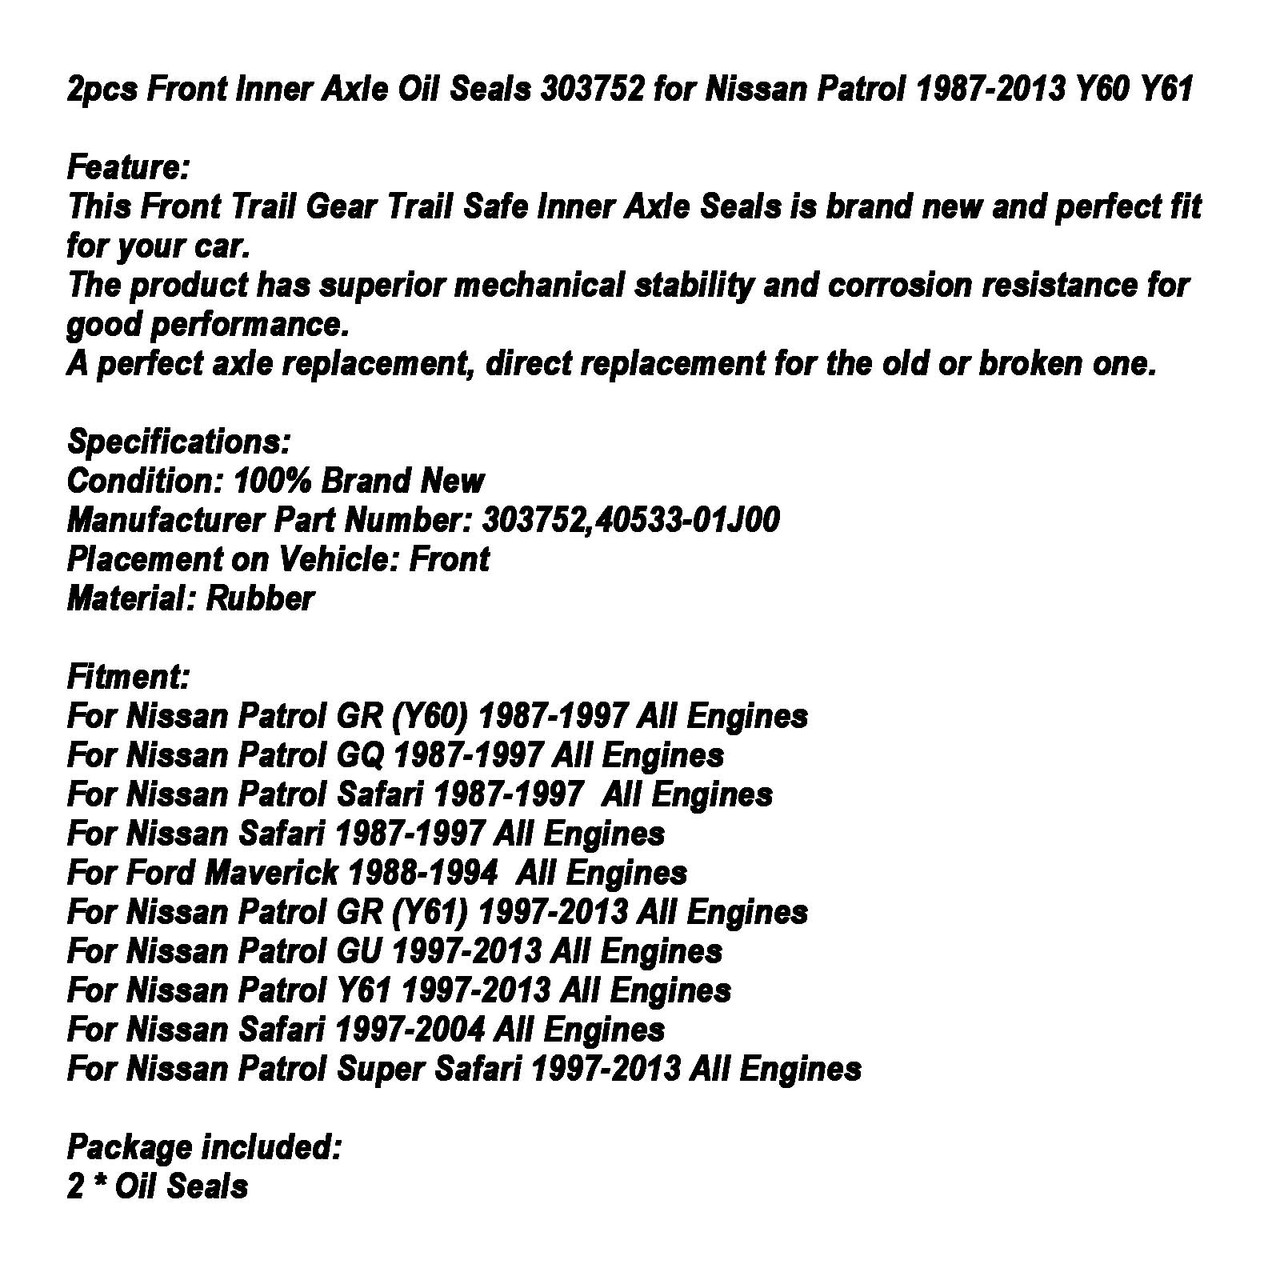 2pcs Front Inner Axle Oil Seals 303752 for Nissan Patrol 1987-2013 Y60 Y61